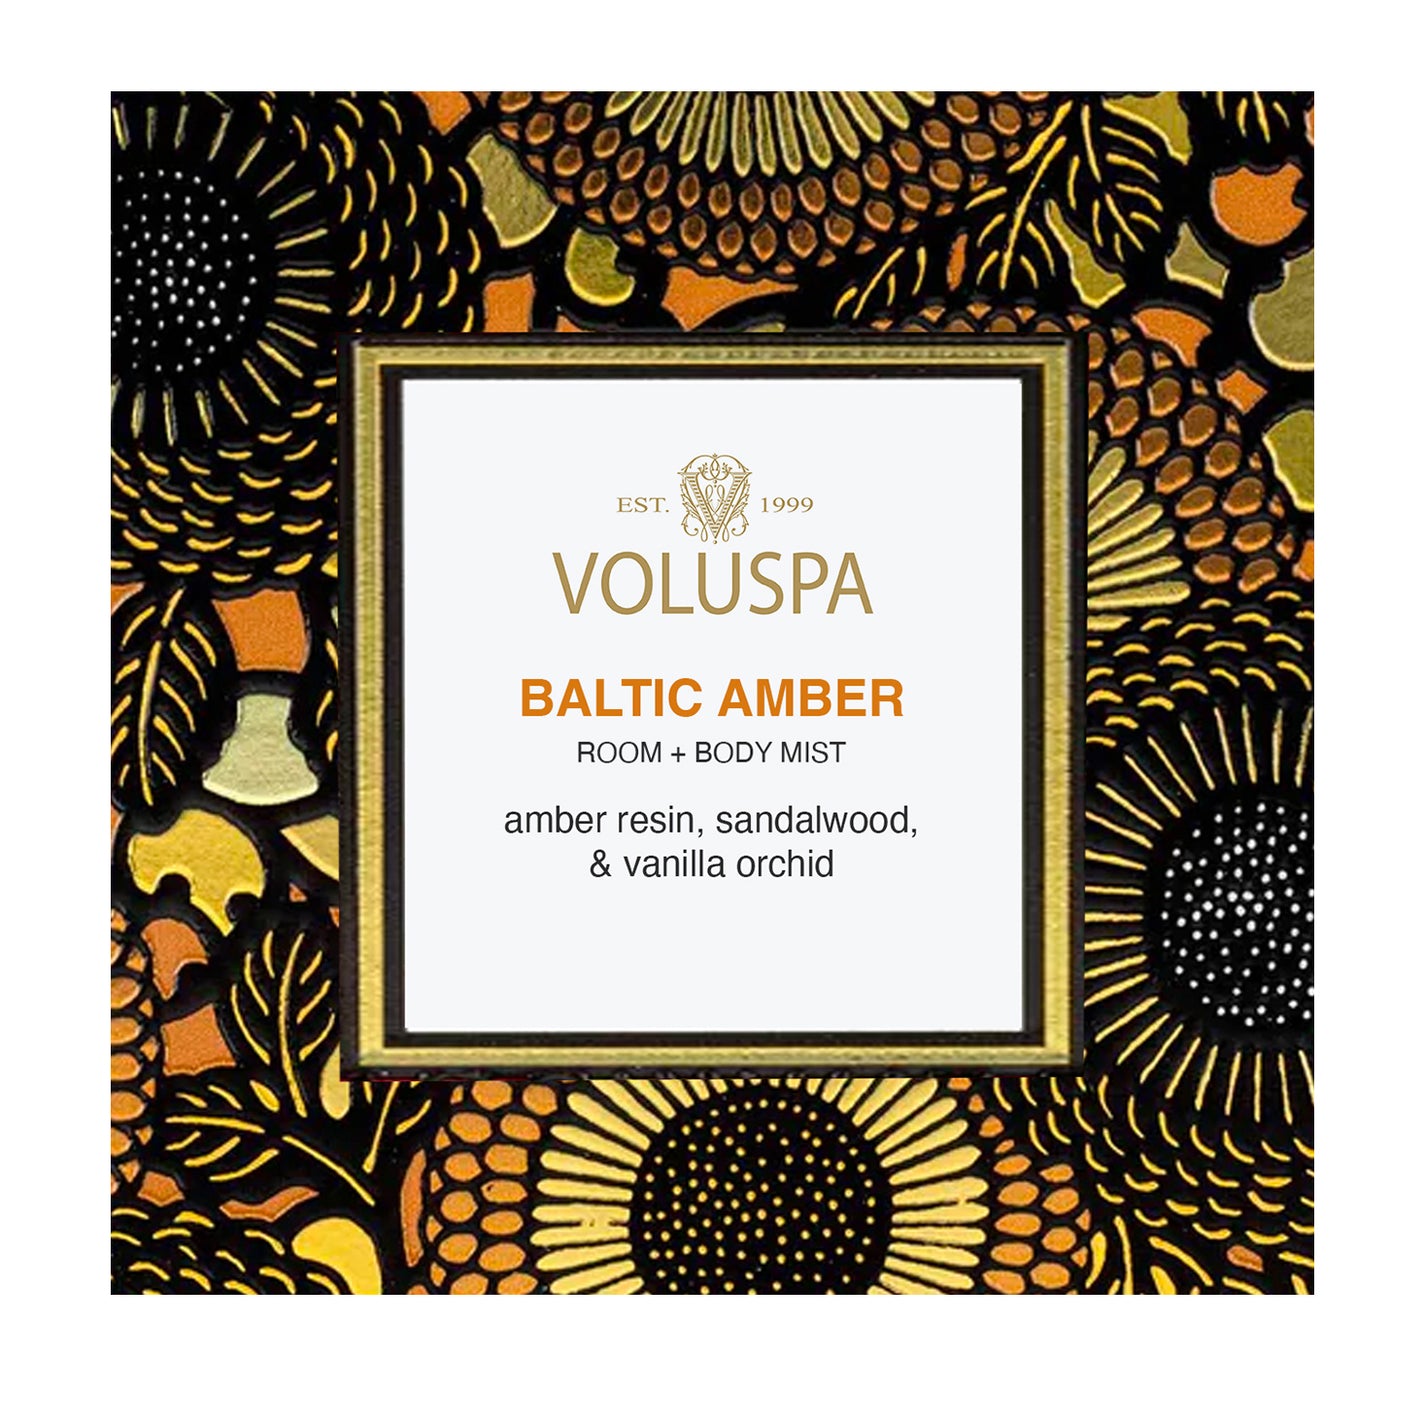 VOLUSPA Baltic Amber Room + Body Mist